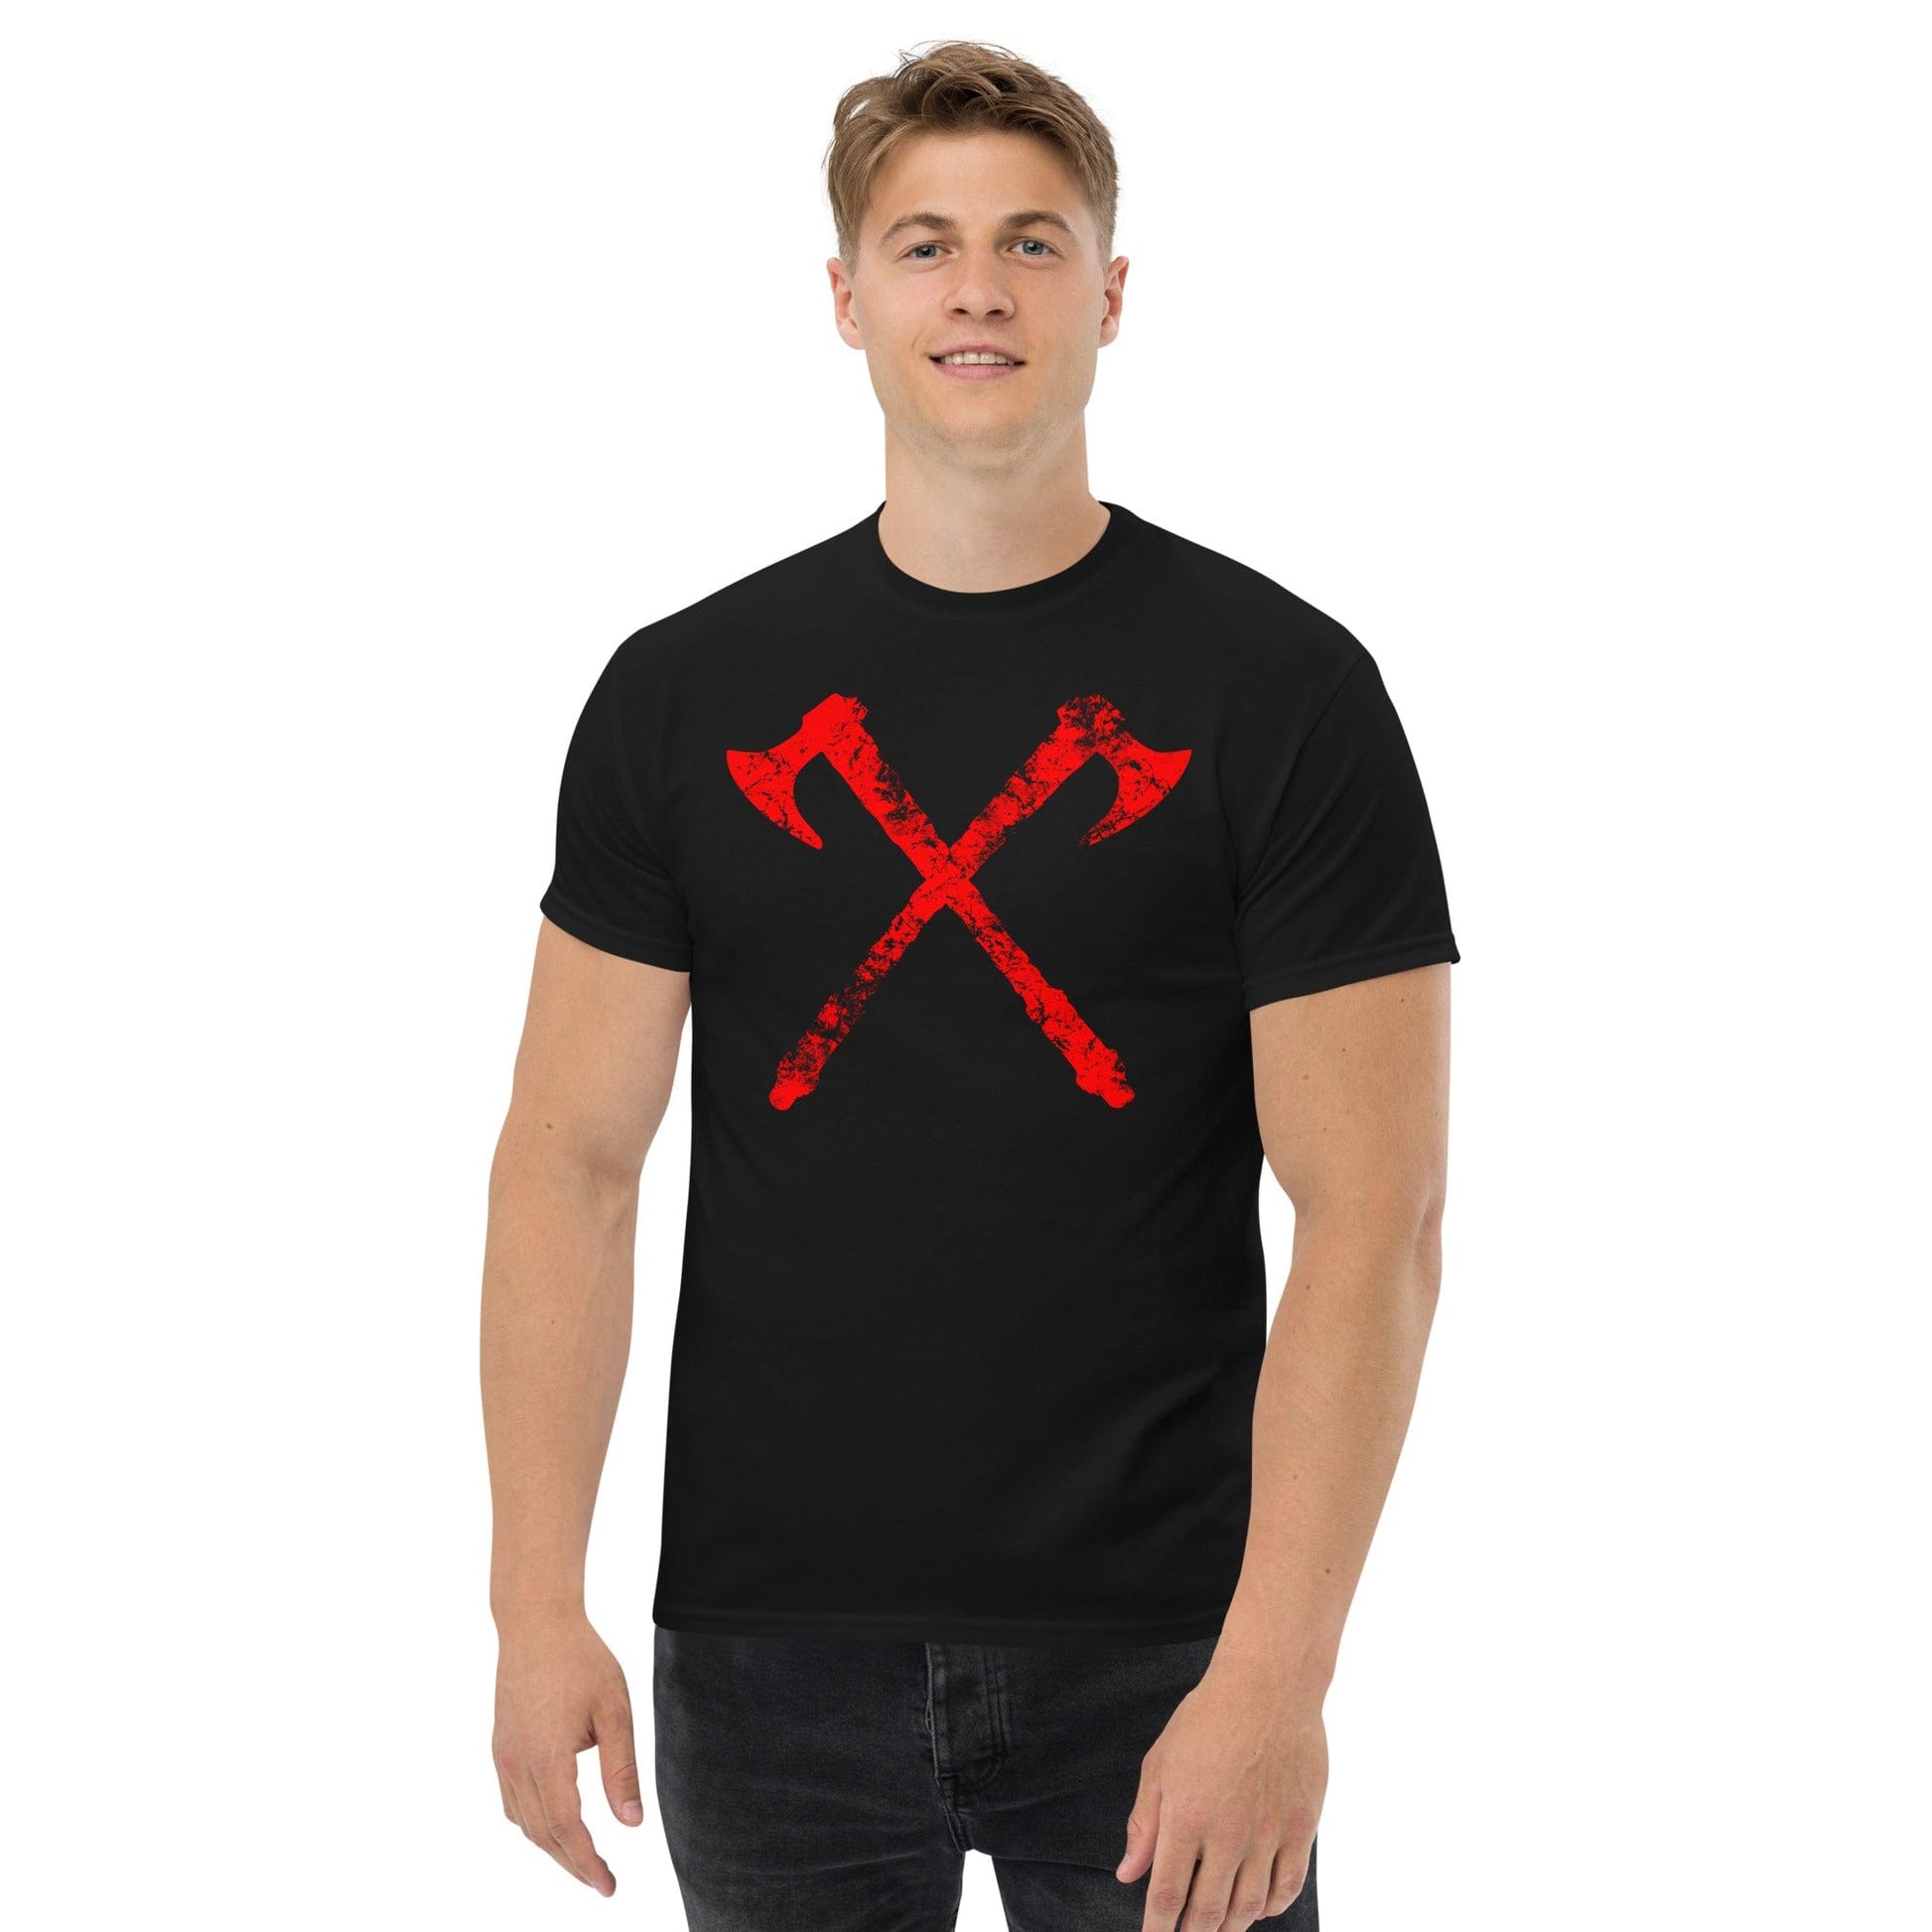 Bloody Viking Axes T-shirt